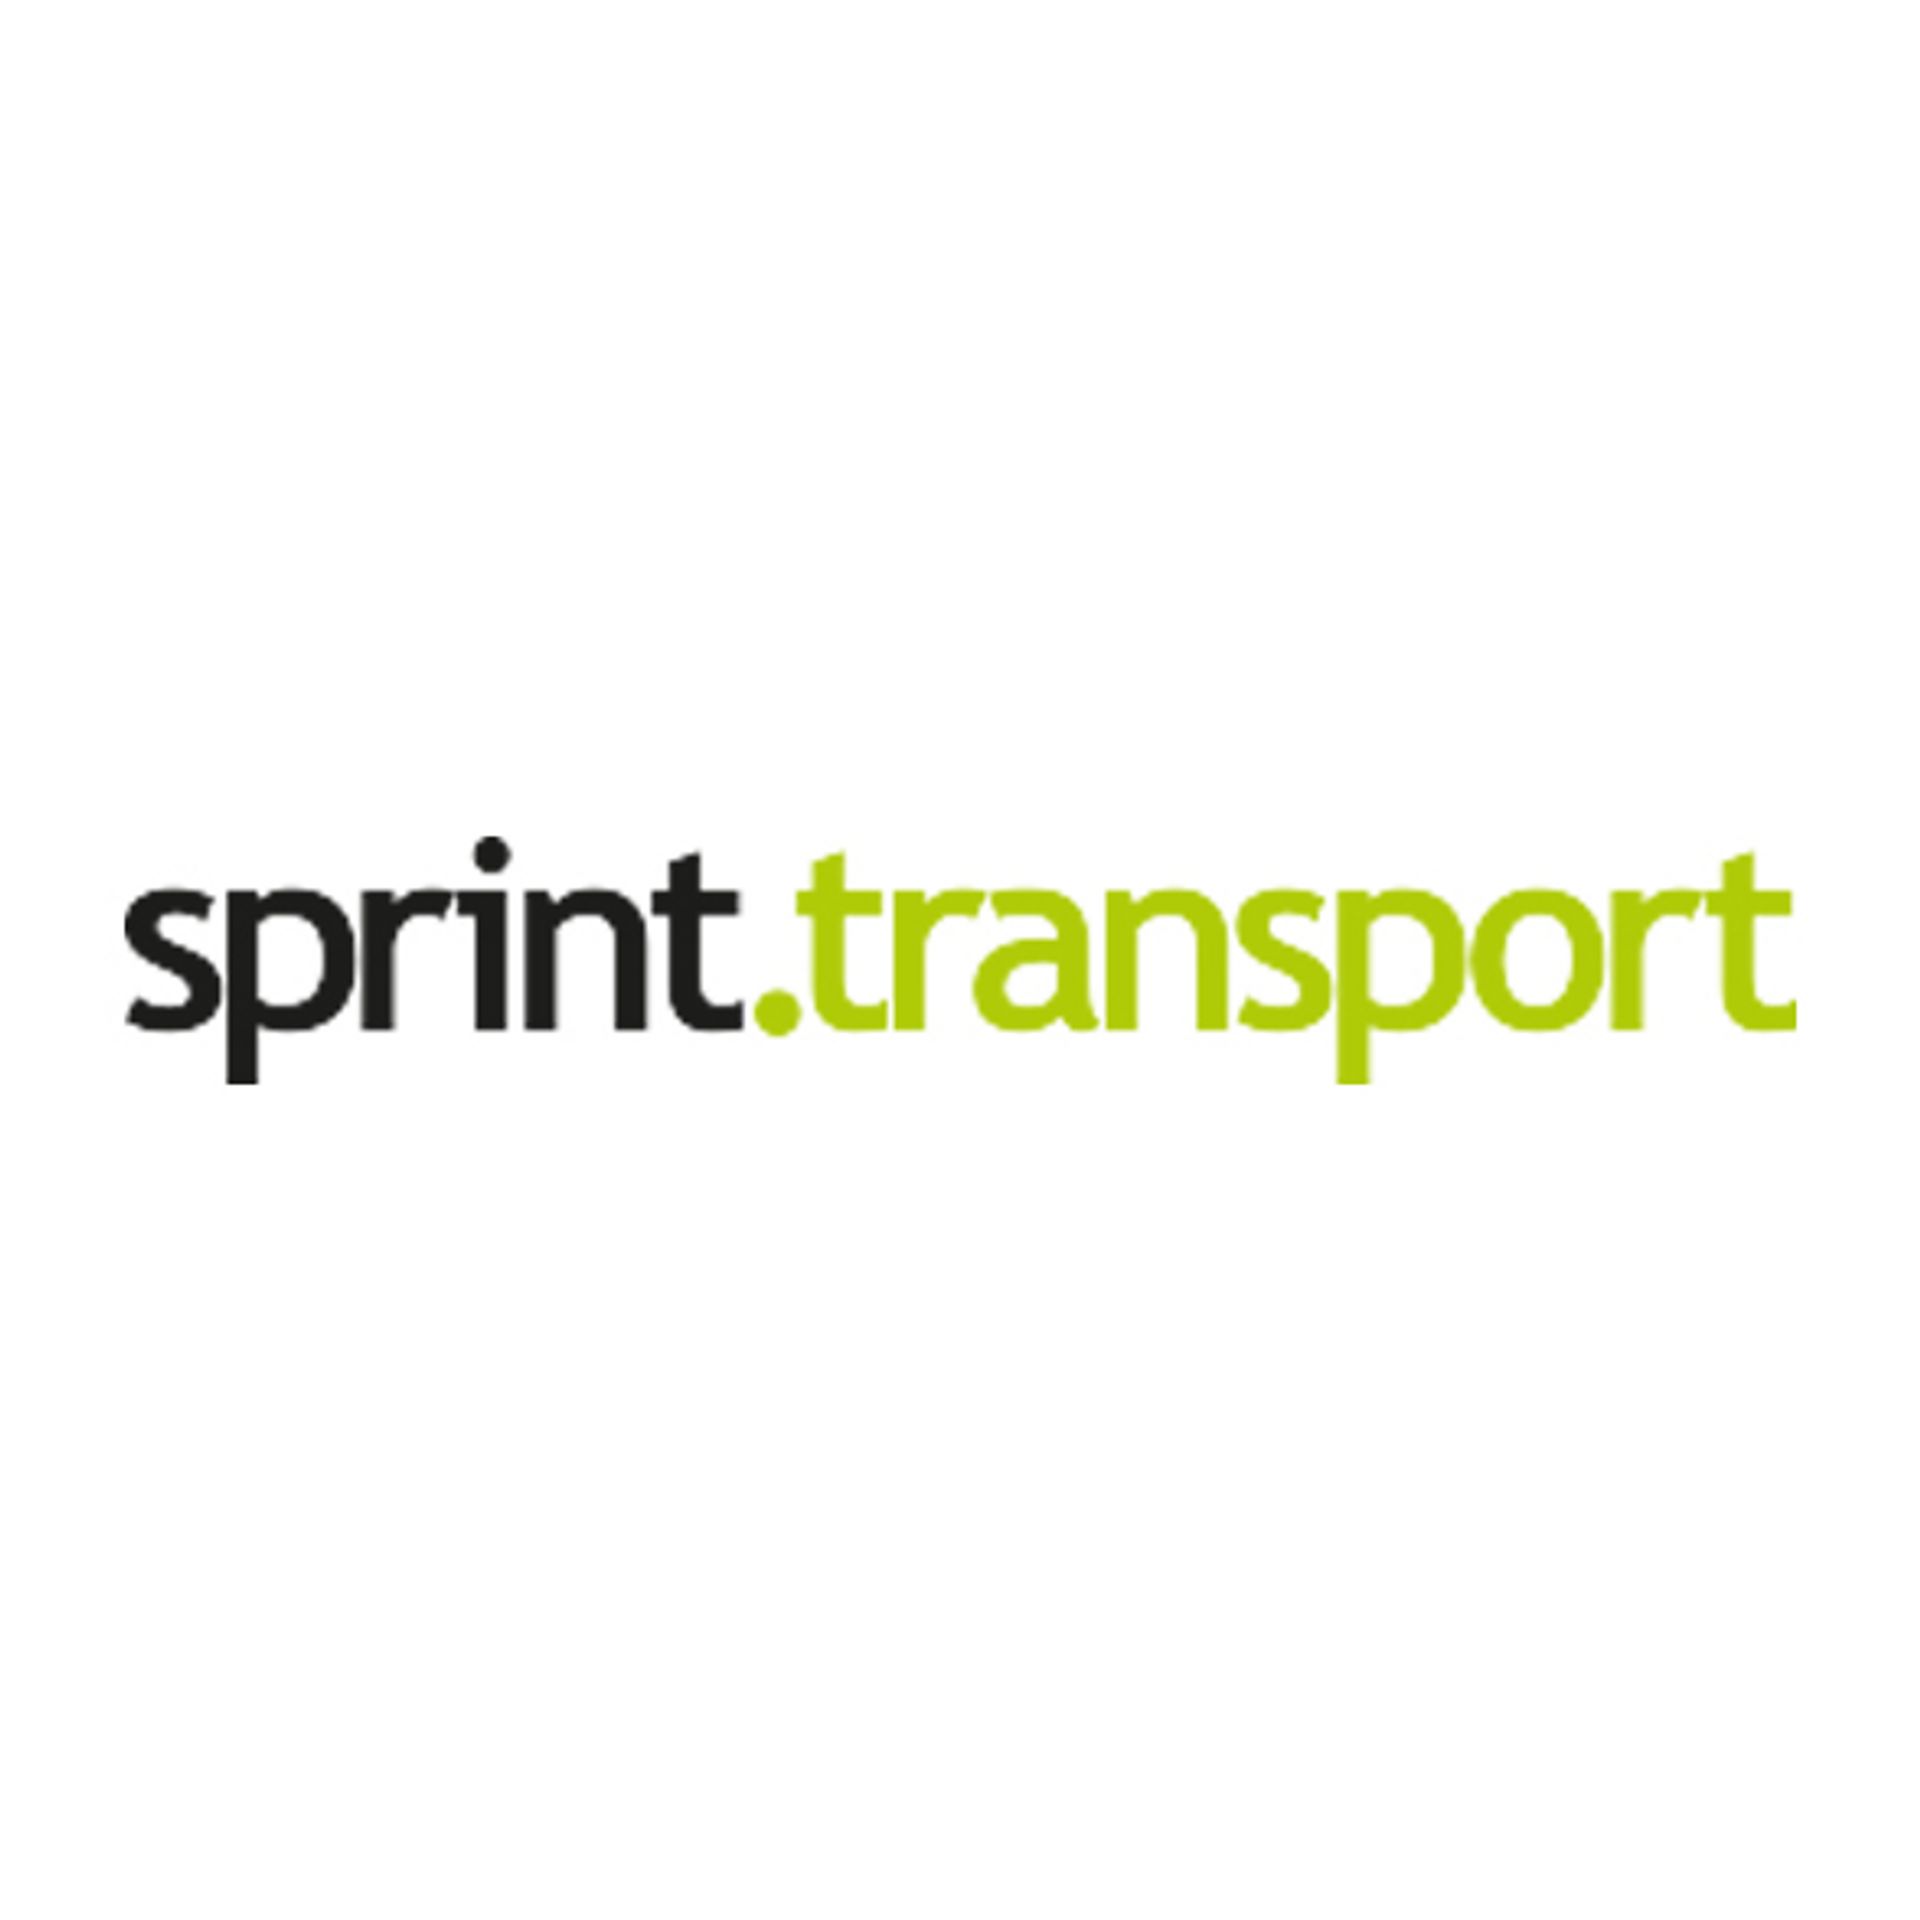 Sprint Transport bvba